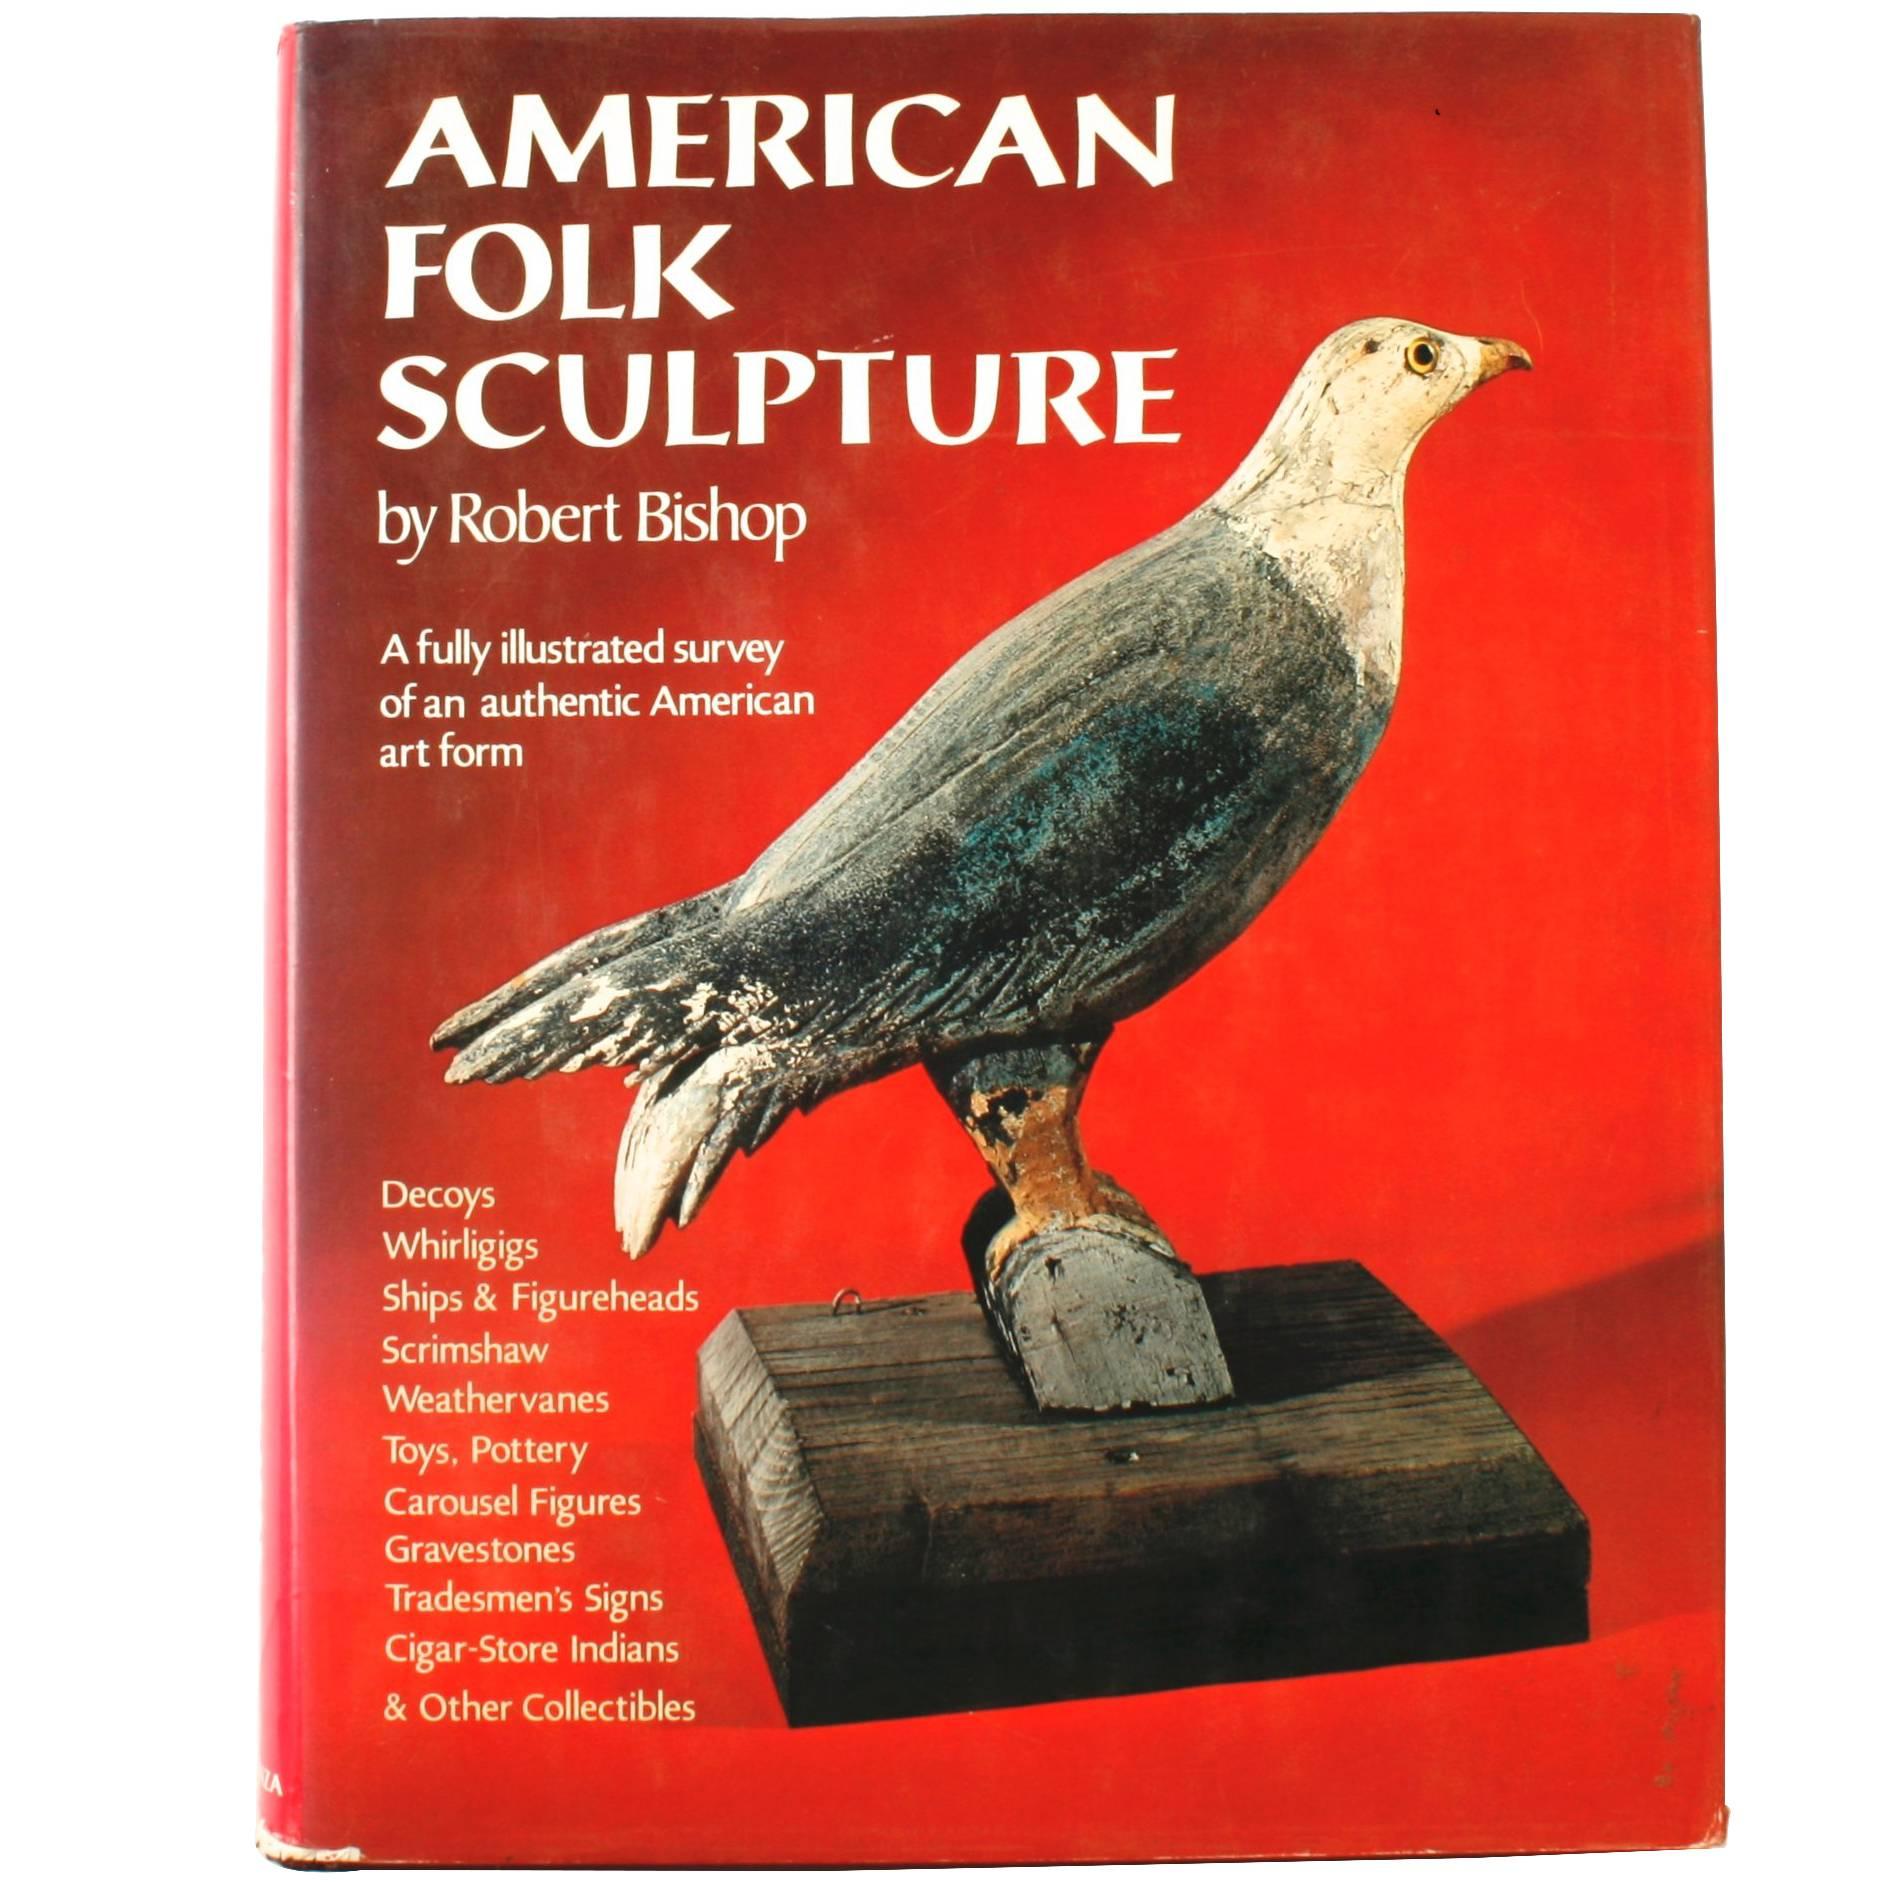 American Folk Sculpture by Robert Bishop